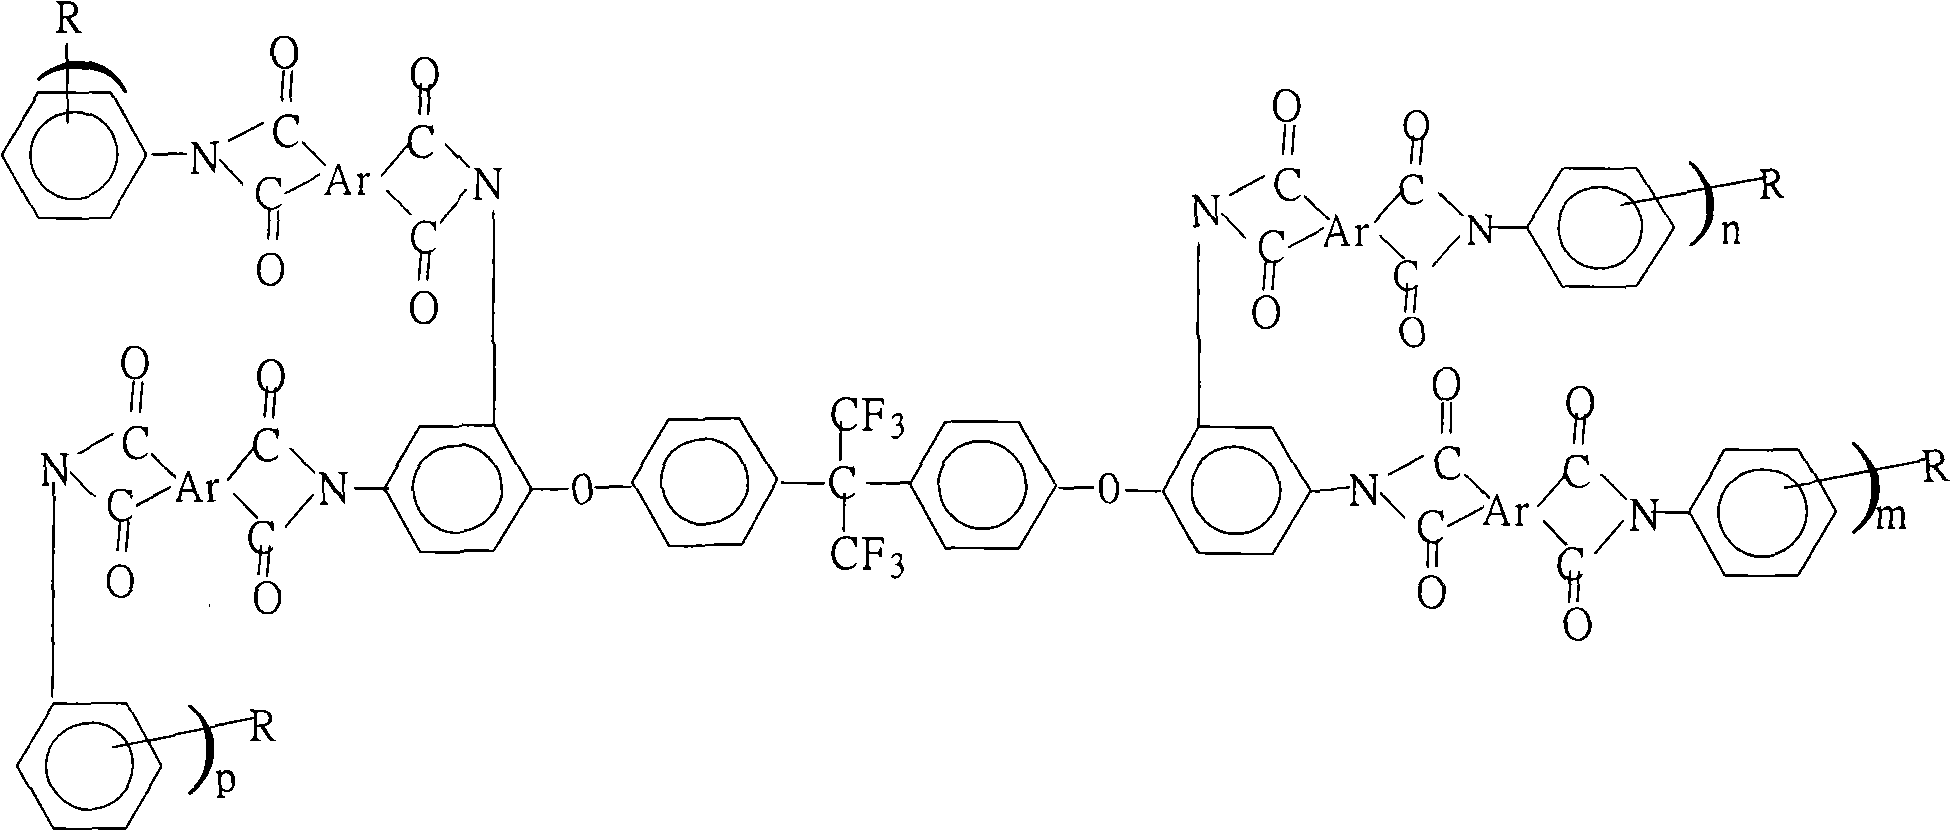 Method for preparing negative photosensitive polyimide based on 2,2-di[4-(2,4-diaminophenyloxy)phenyl]hexafluoropropane